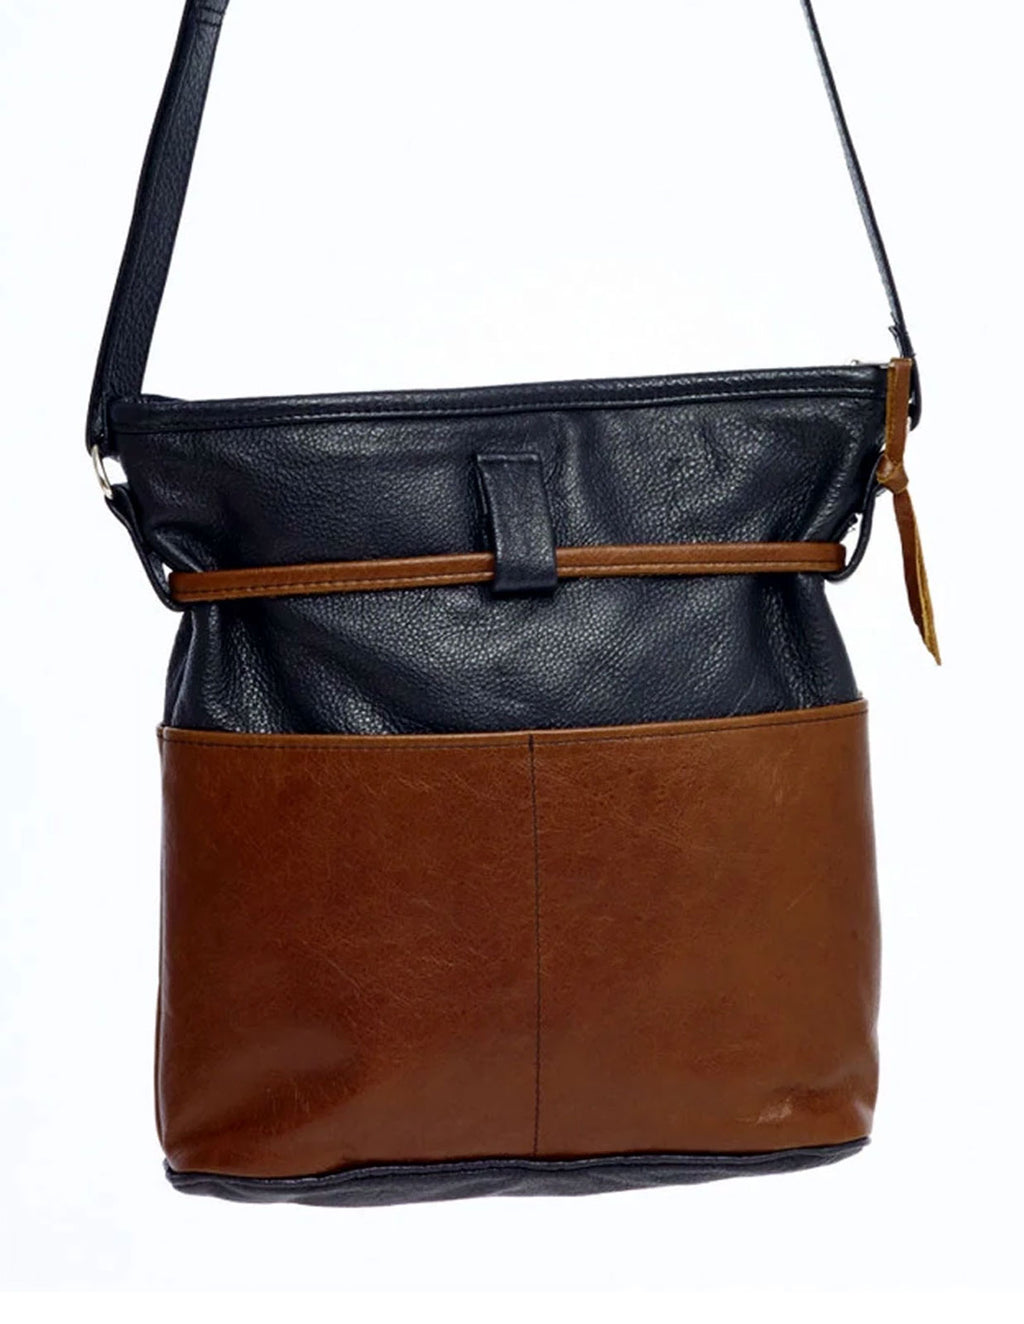 Four-Pocket Purse - Indian Summer's designer leather purses